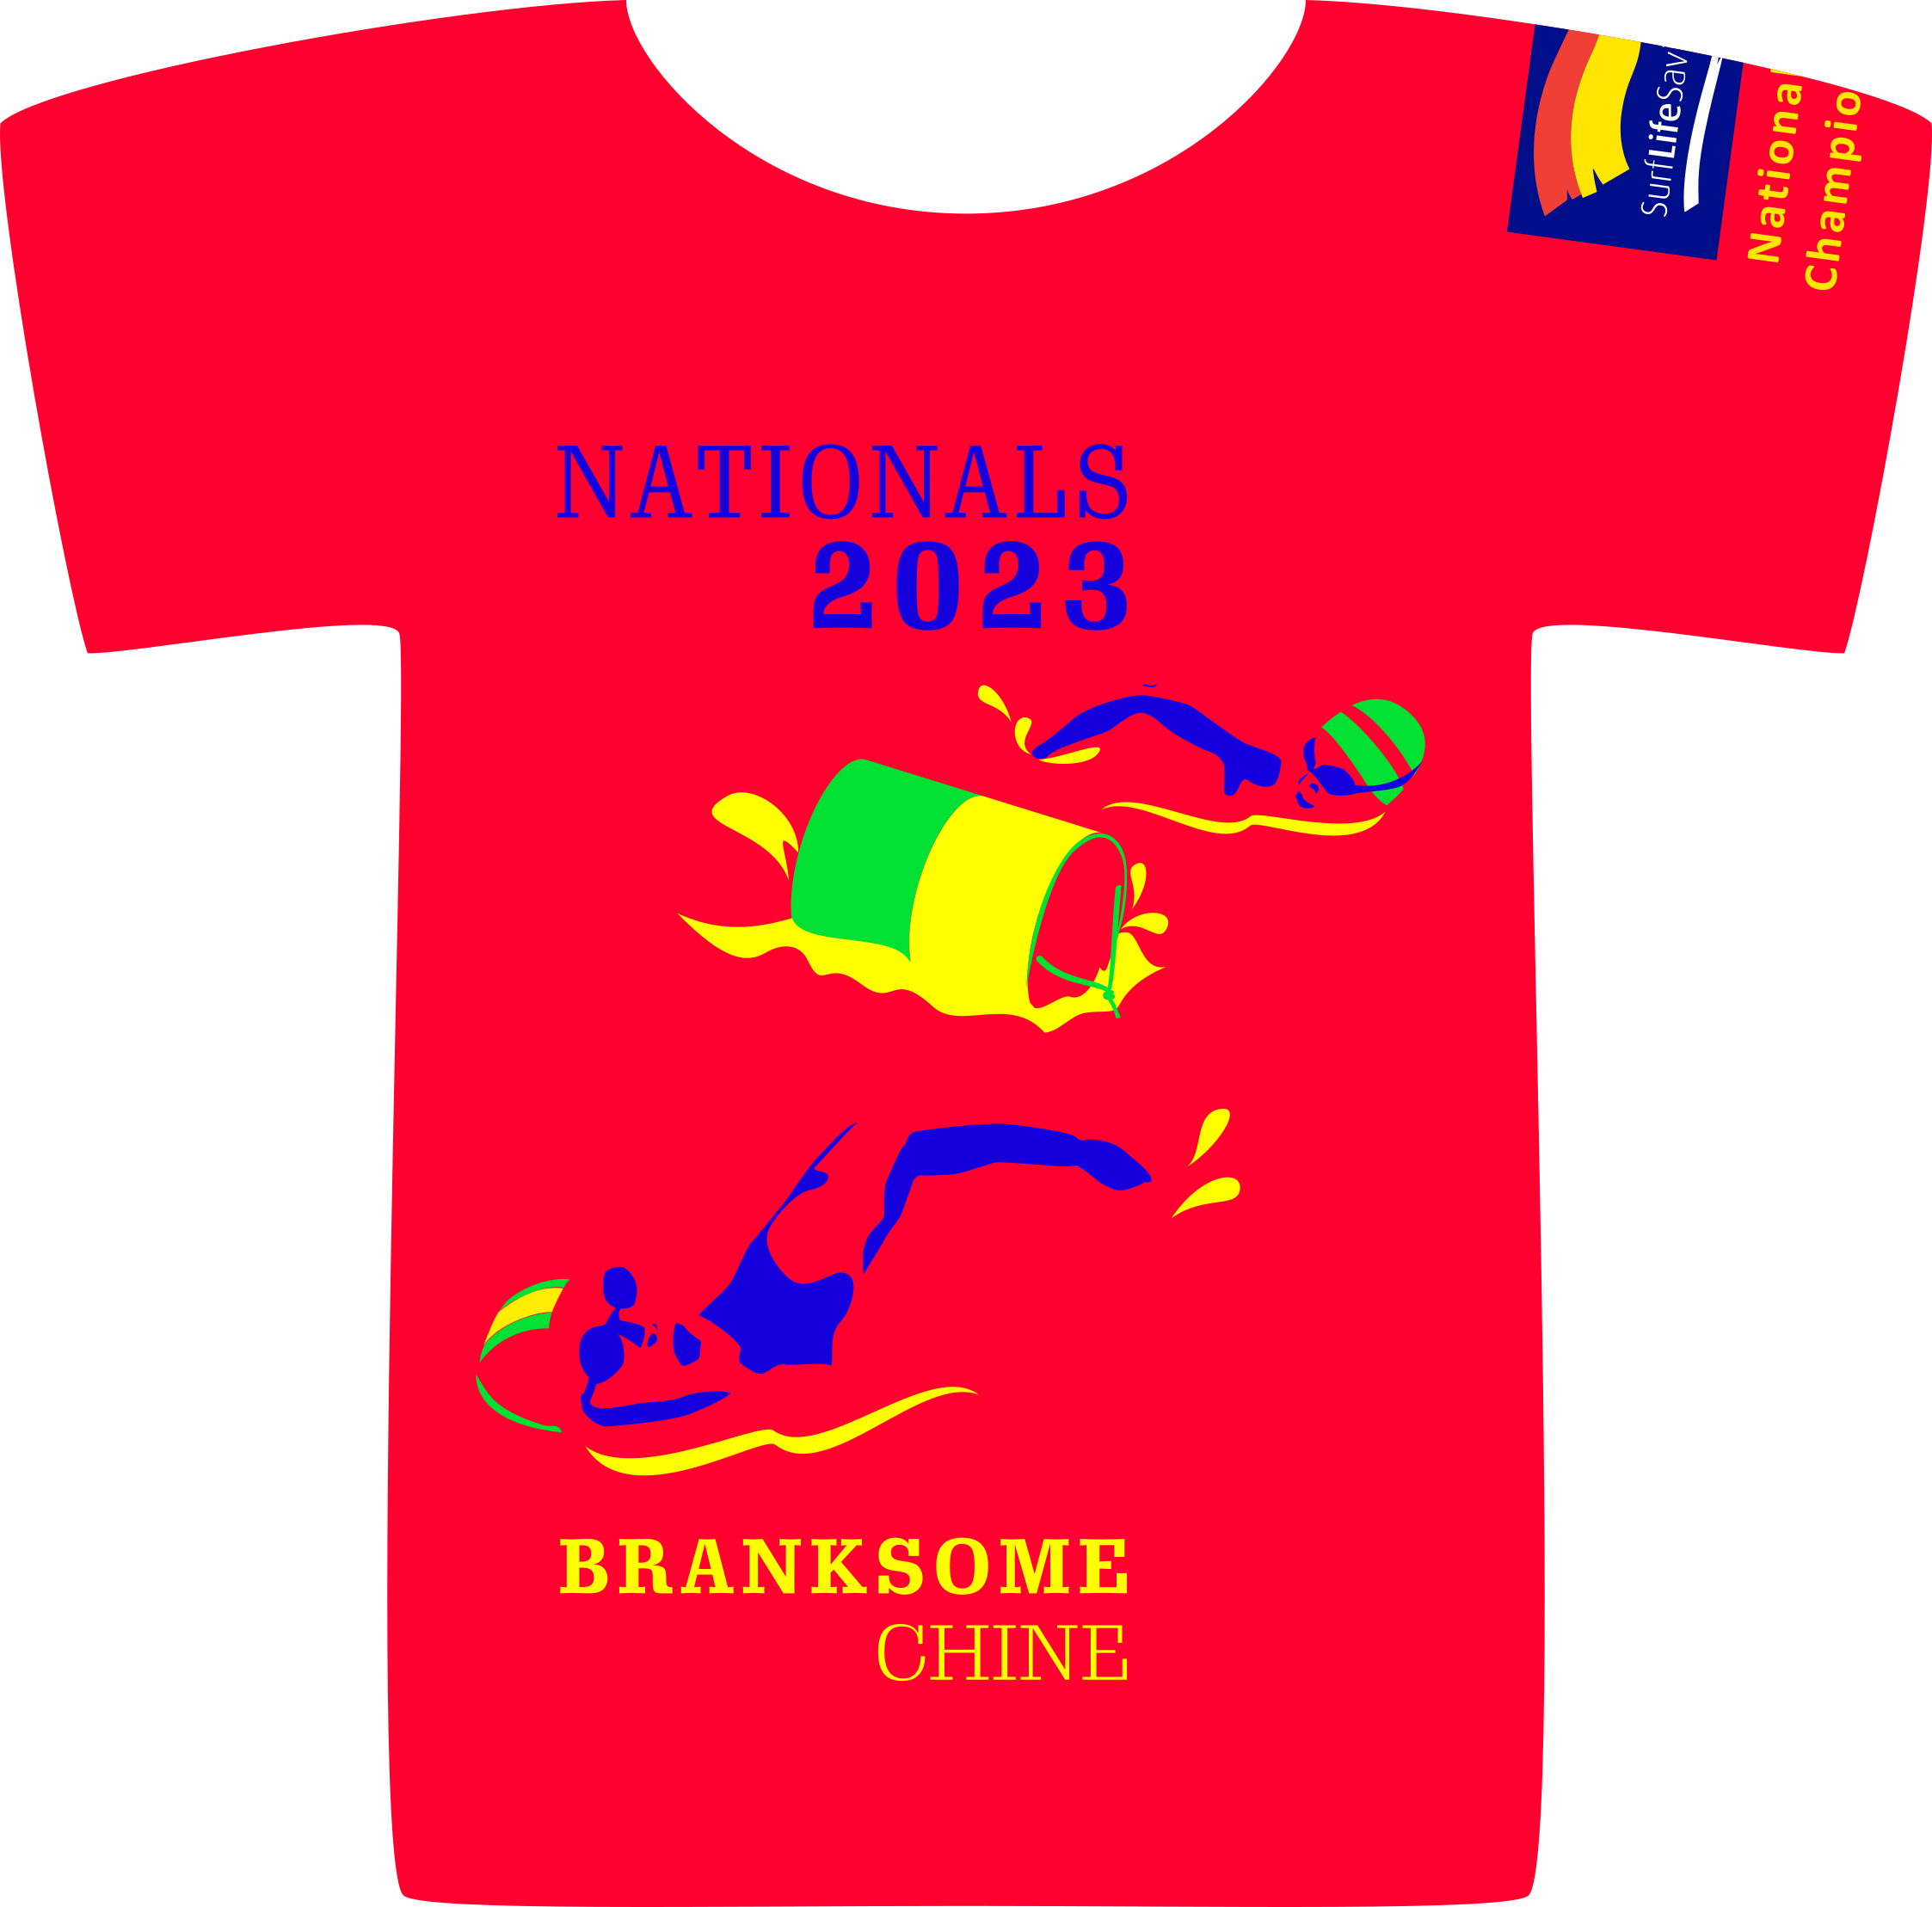 Nationals 2023, BRANKSOME CHINE